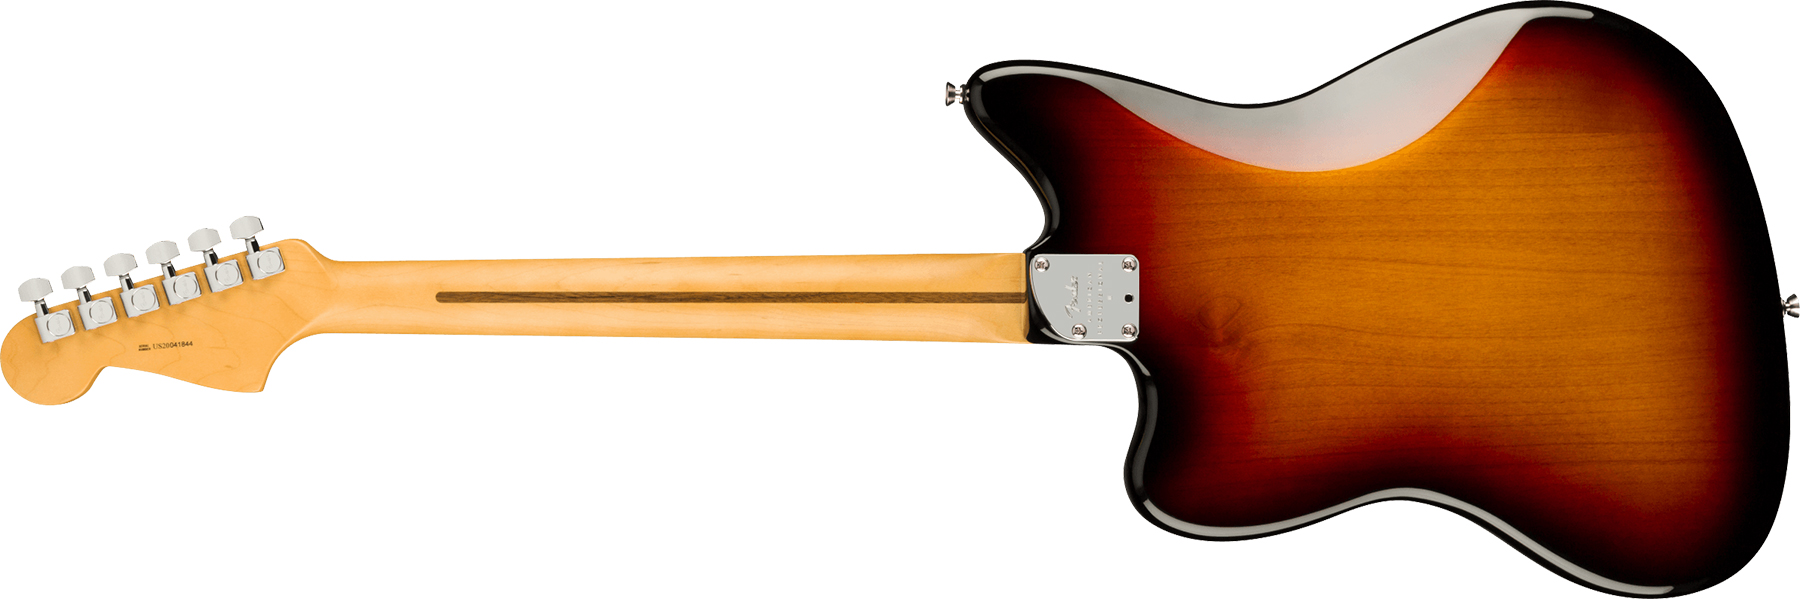 Fender Jazzmaster American Professional Ii Usa Rw - 3-color Sunburst - Retro rock electric guitar - Variation 1